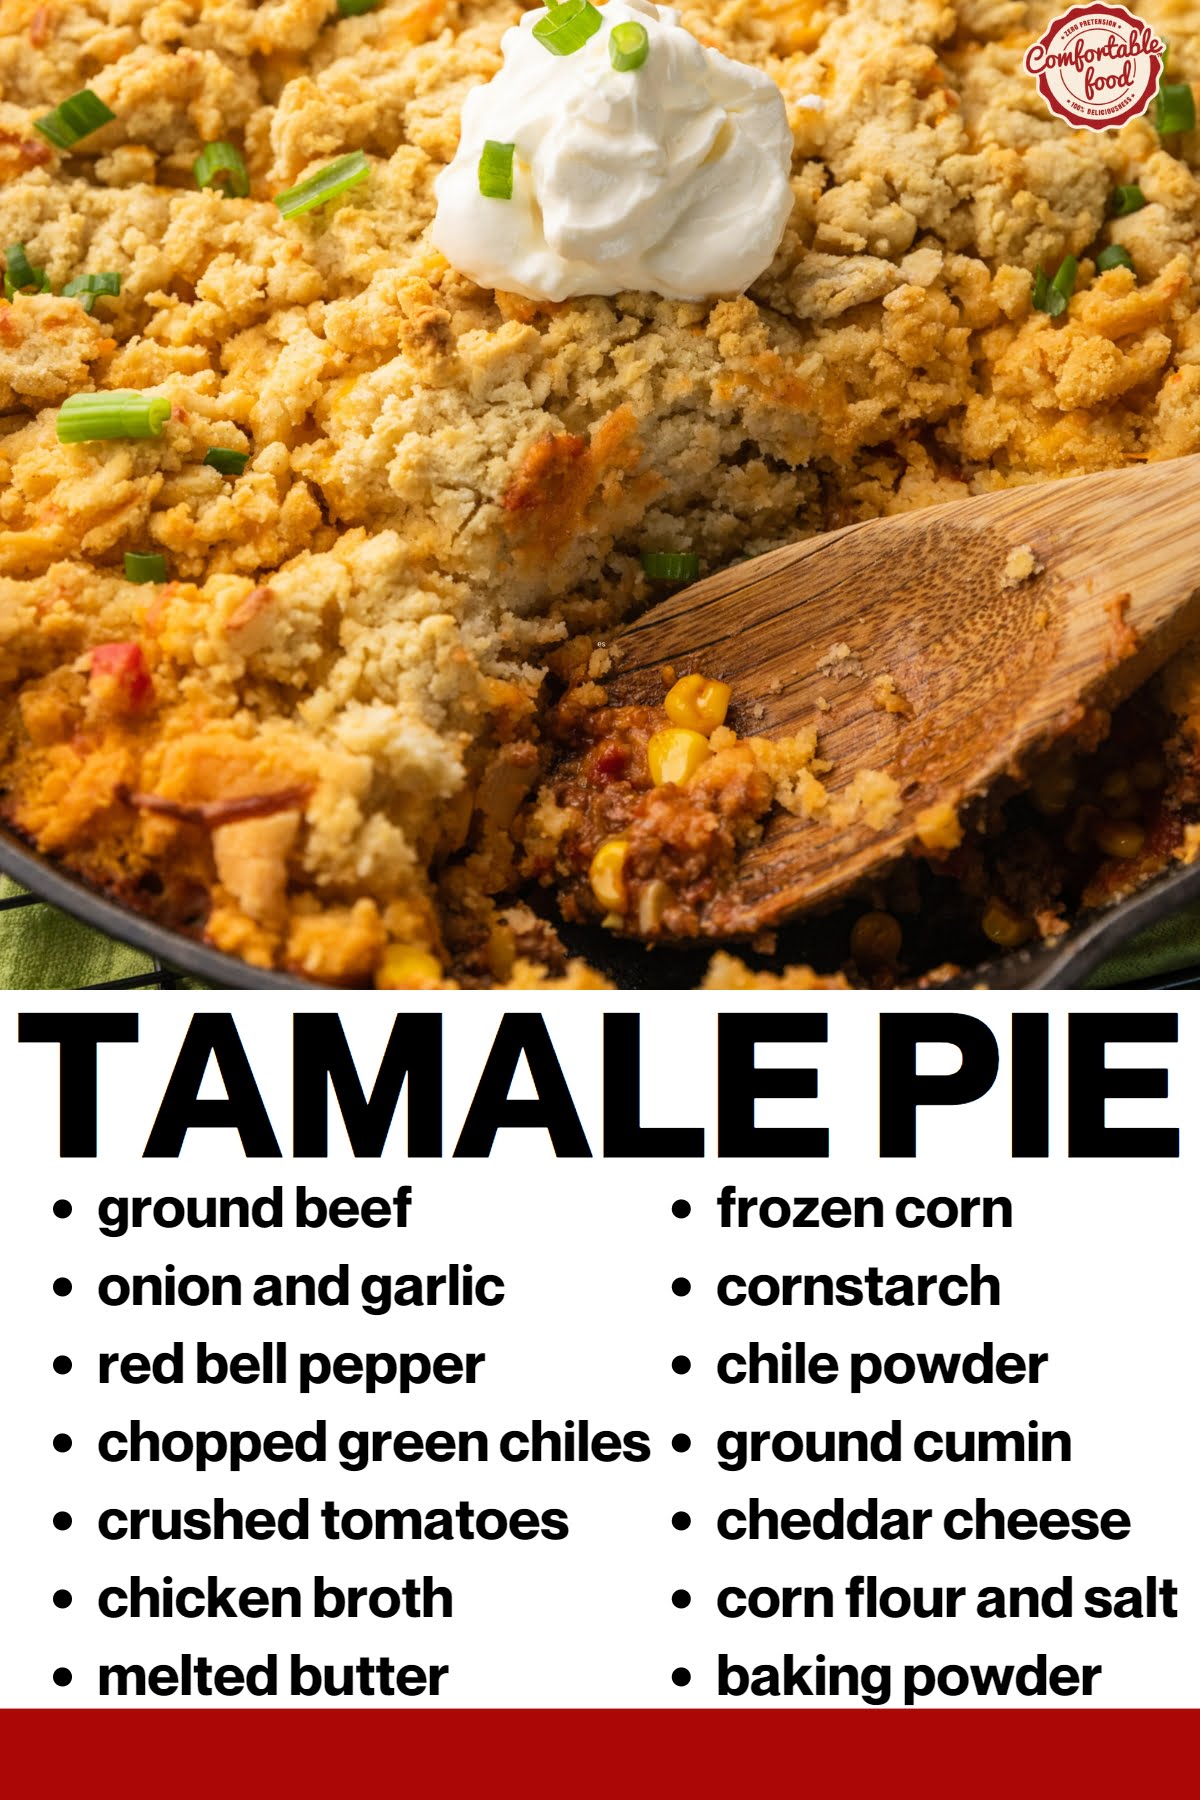 Tamale pie - socials